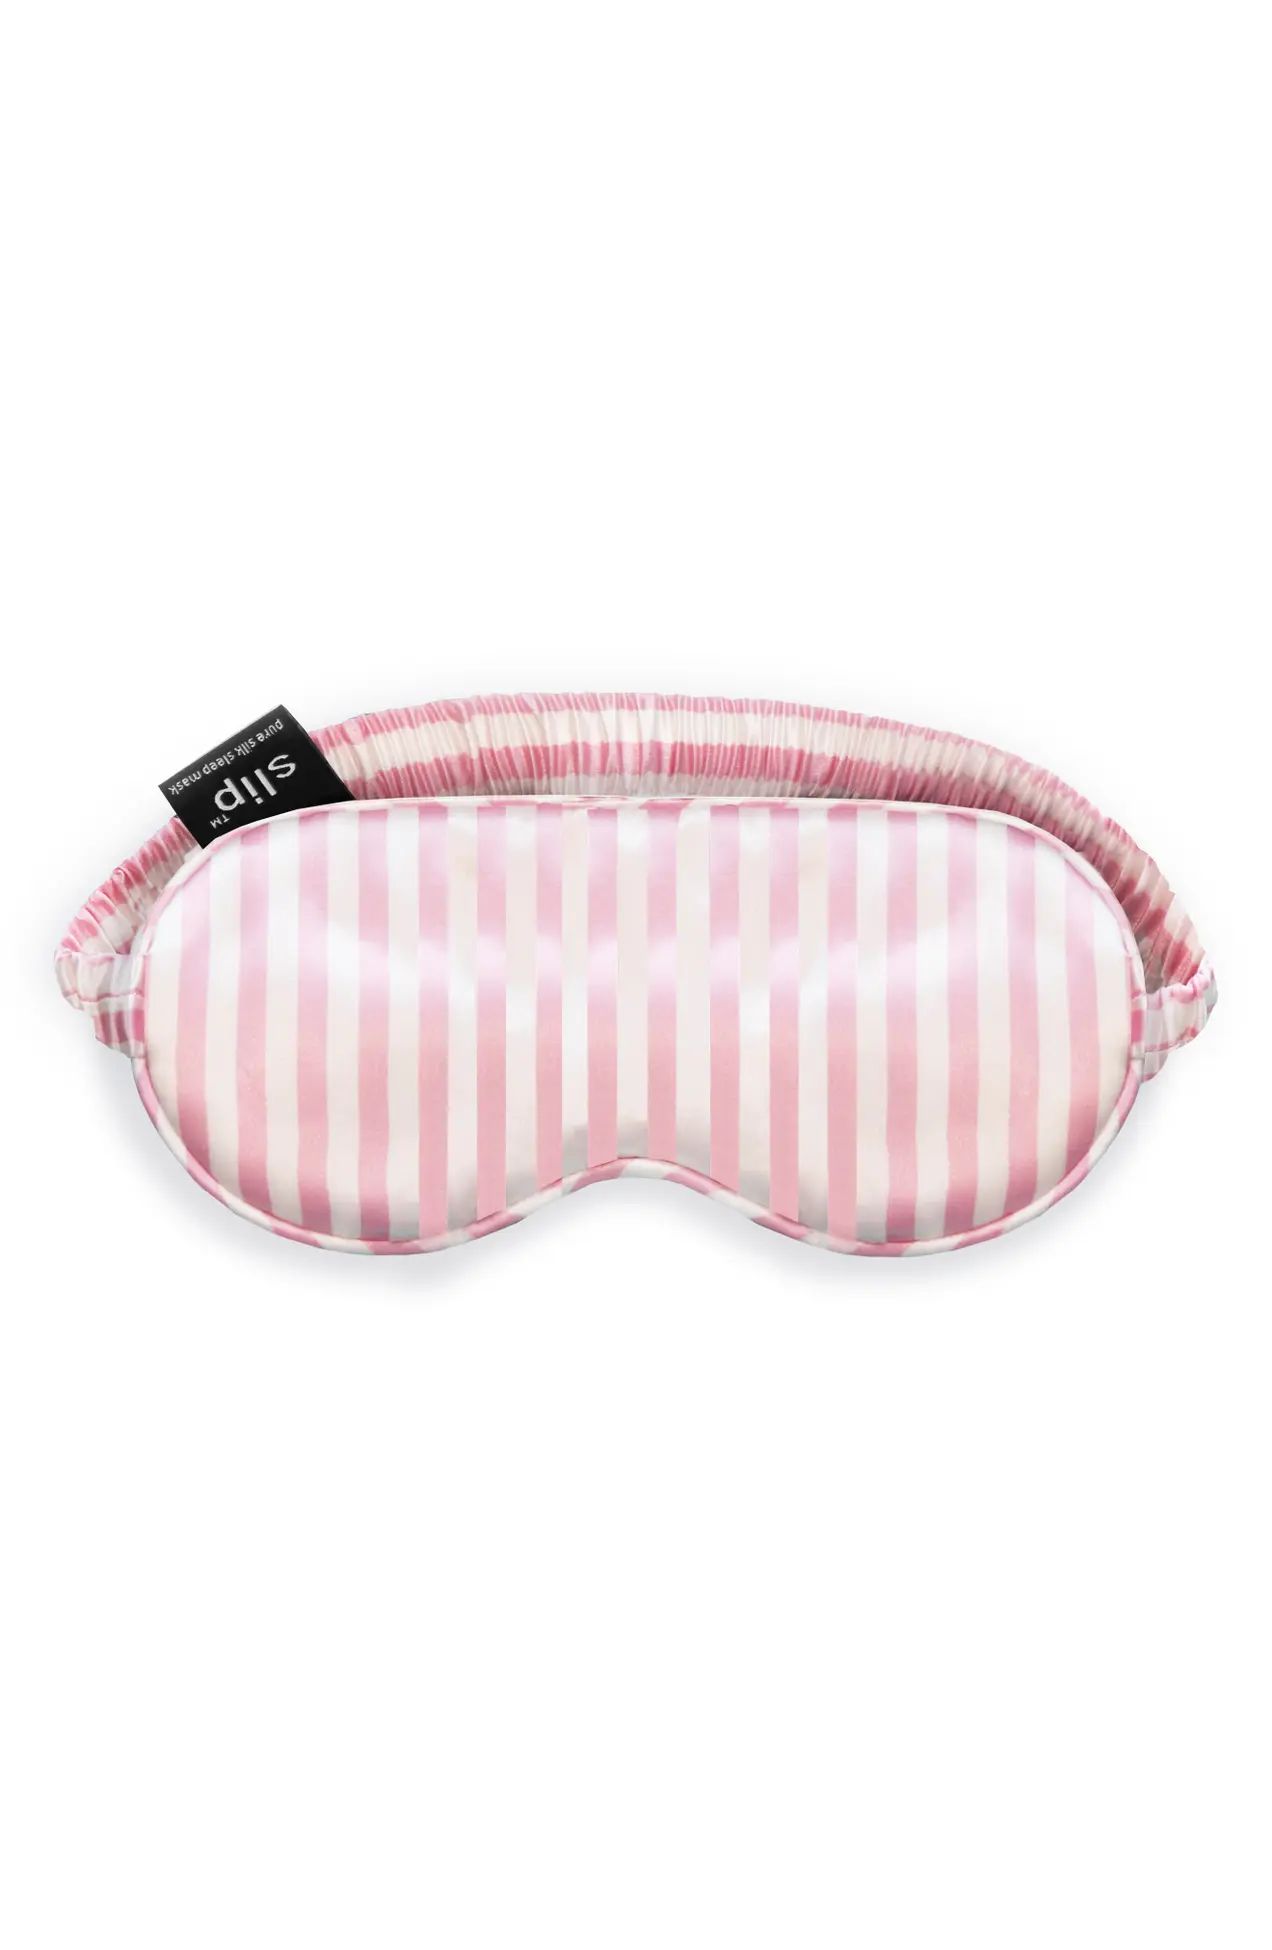 Silk Sleep Mask - Pink Stripe | Nordstrom Rack